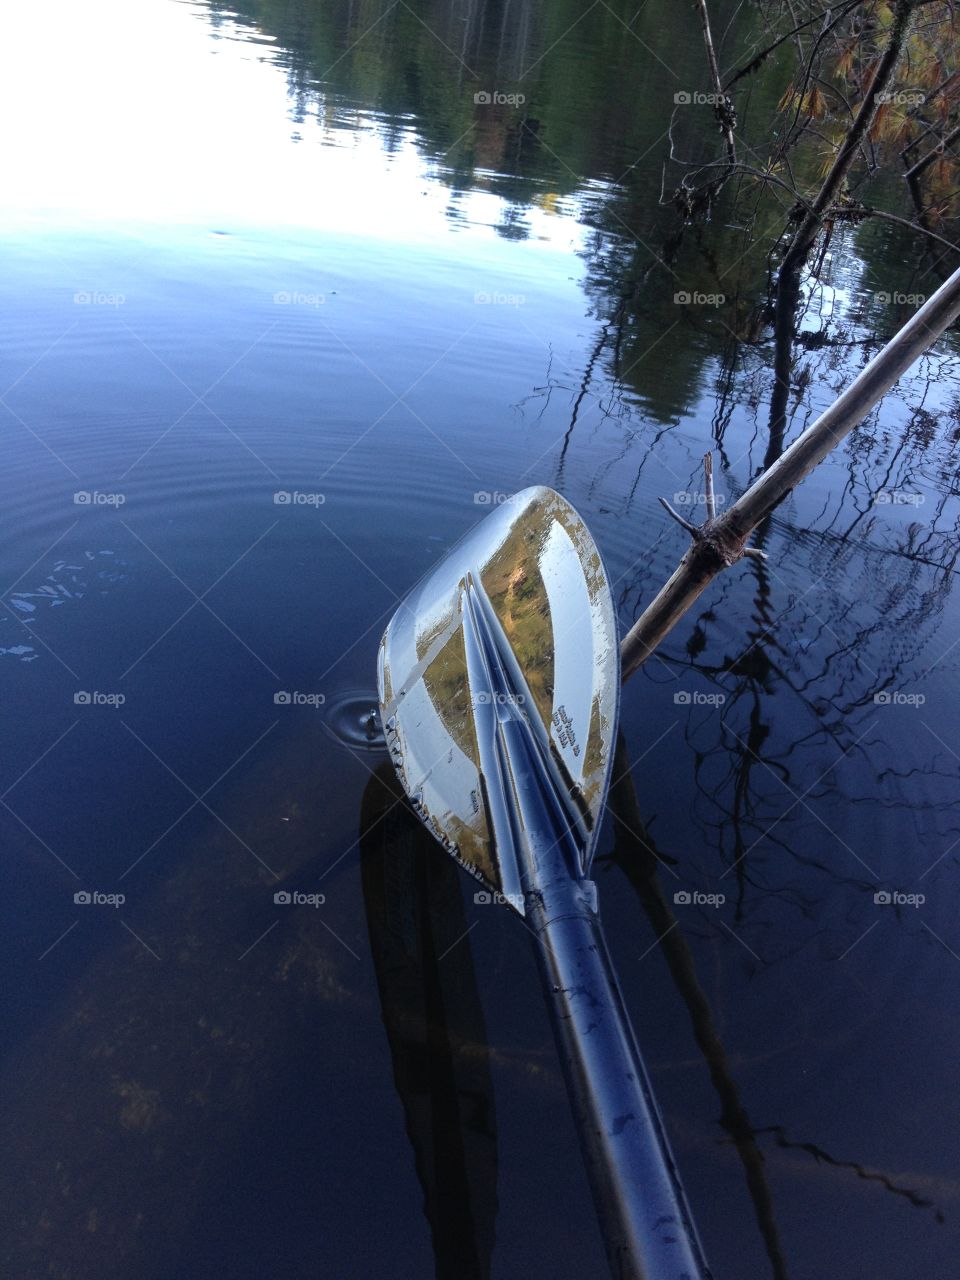 Paddle Mirror . Pause while lake paddling. Paddle reflected image from the lake shore